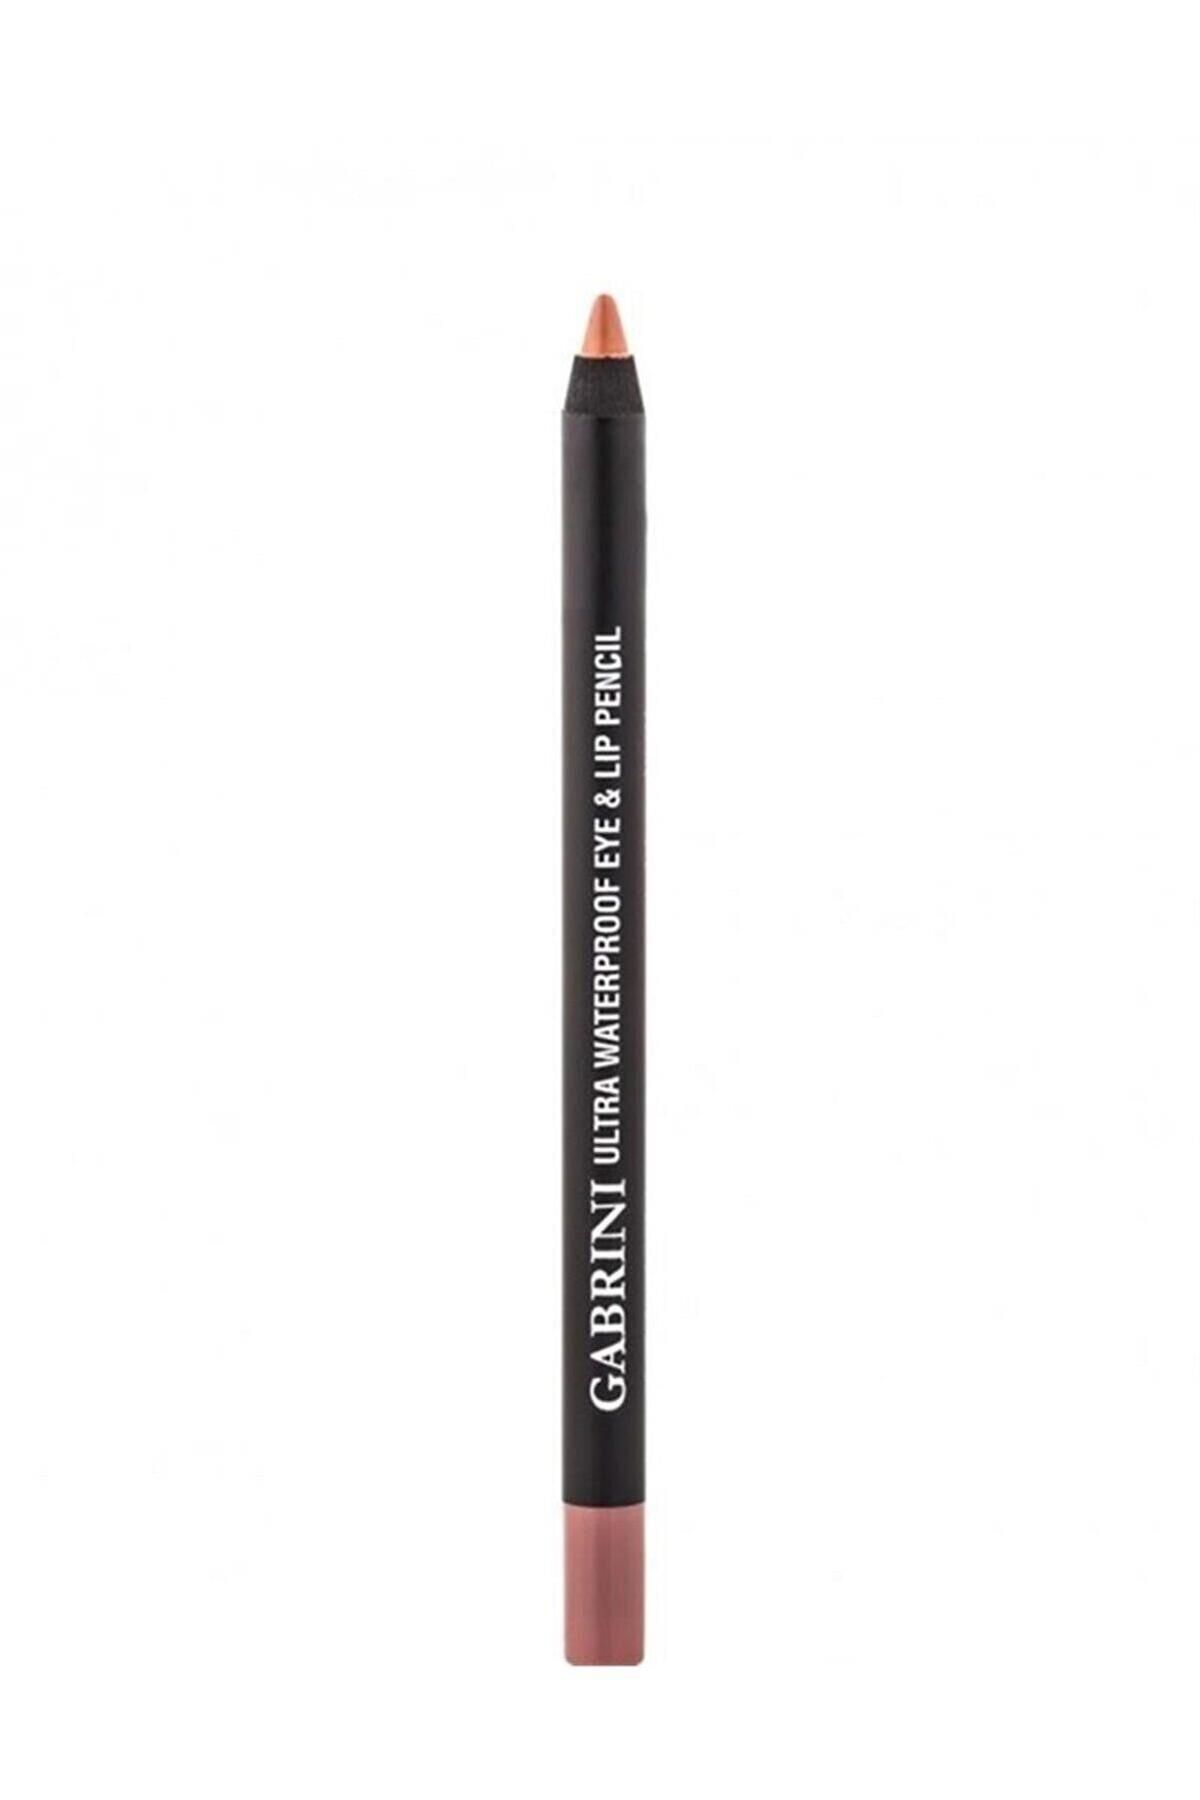 Gabrini Ultra Waterproof Eye & Lip Pencil 04